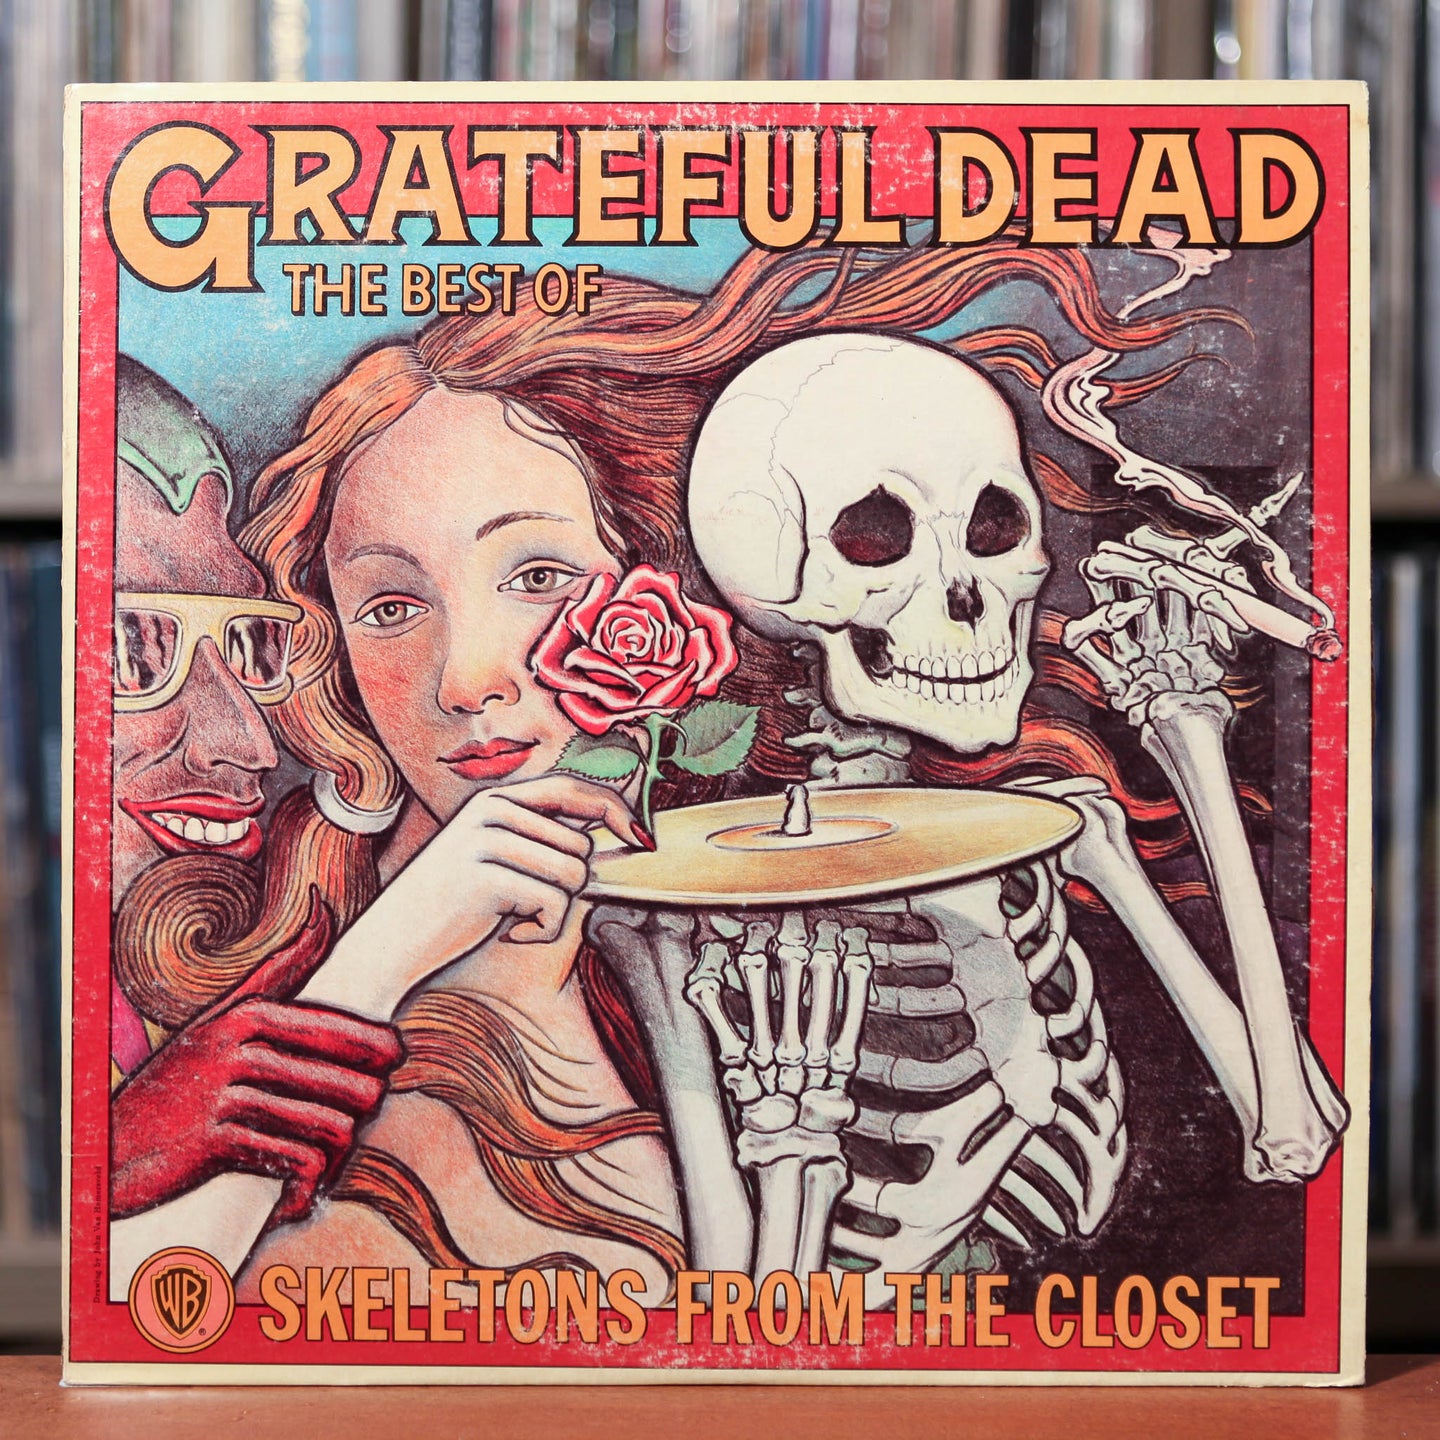 The Grateful Dead - The Best Of The Grateful Dead: Skeletons From The Closet - 1974 Warner Bros, VG+/VG